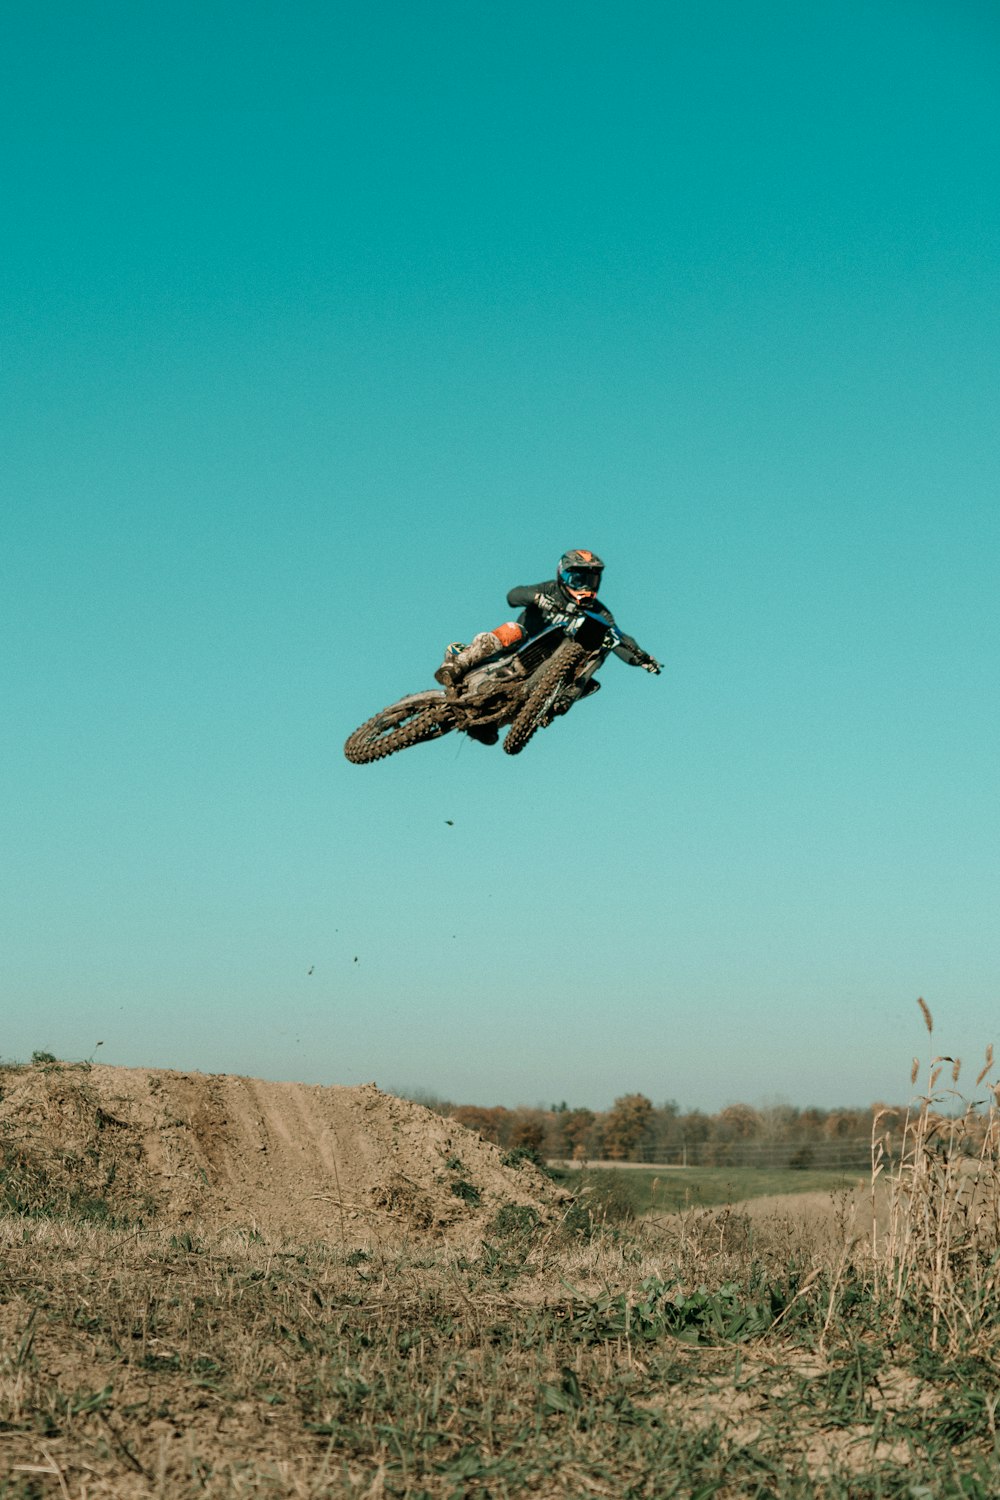 a person jumping a dirt bike in the air